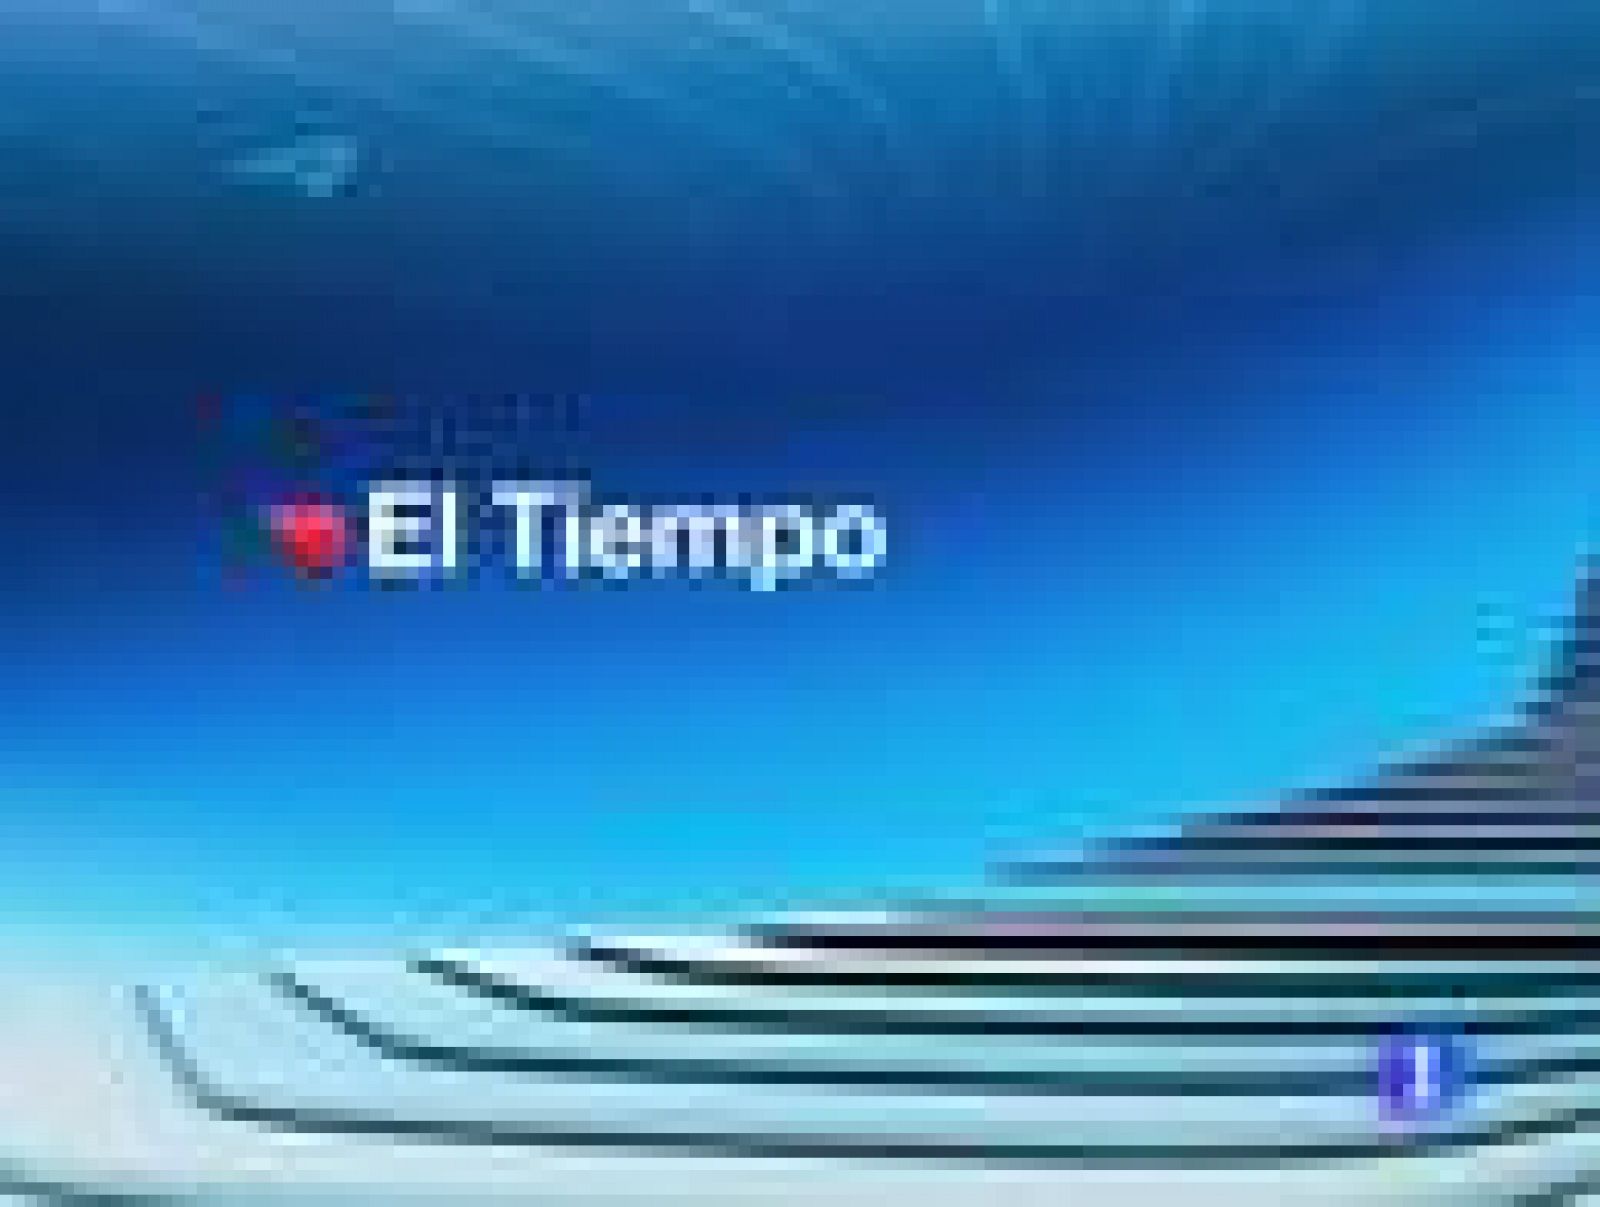 Informativo Telerioja: El tiempo en La Rioja - 01/07/13 | RTVE Play